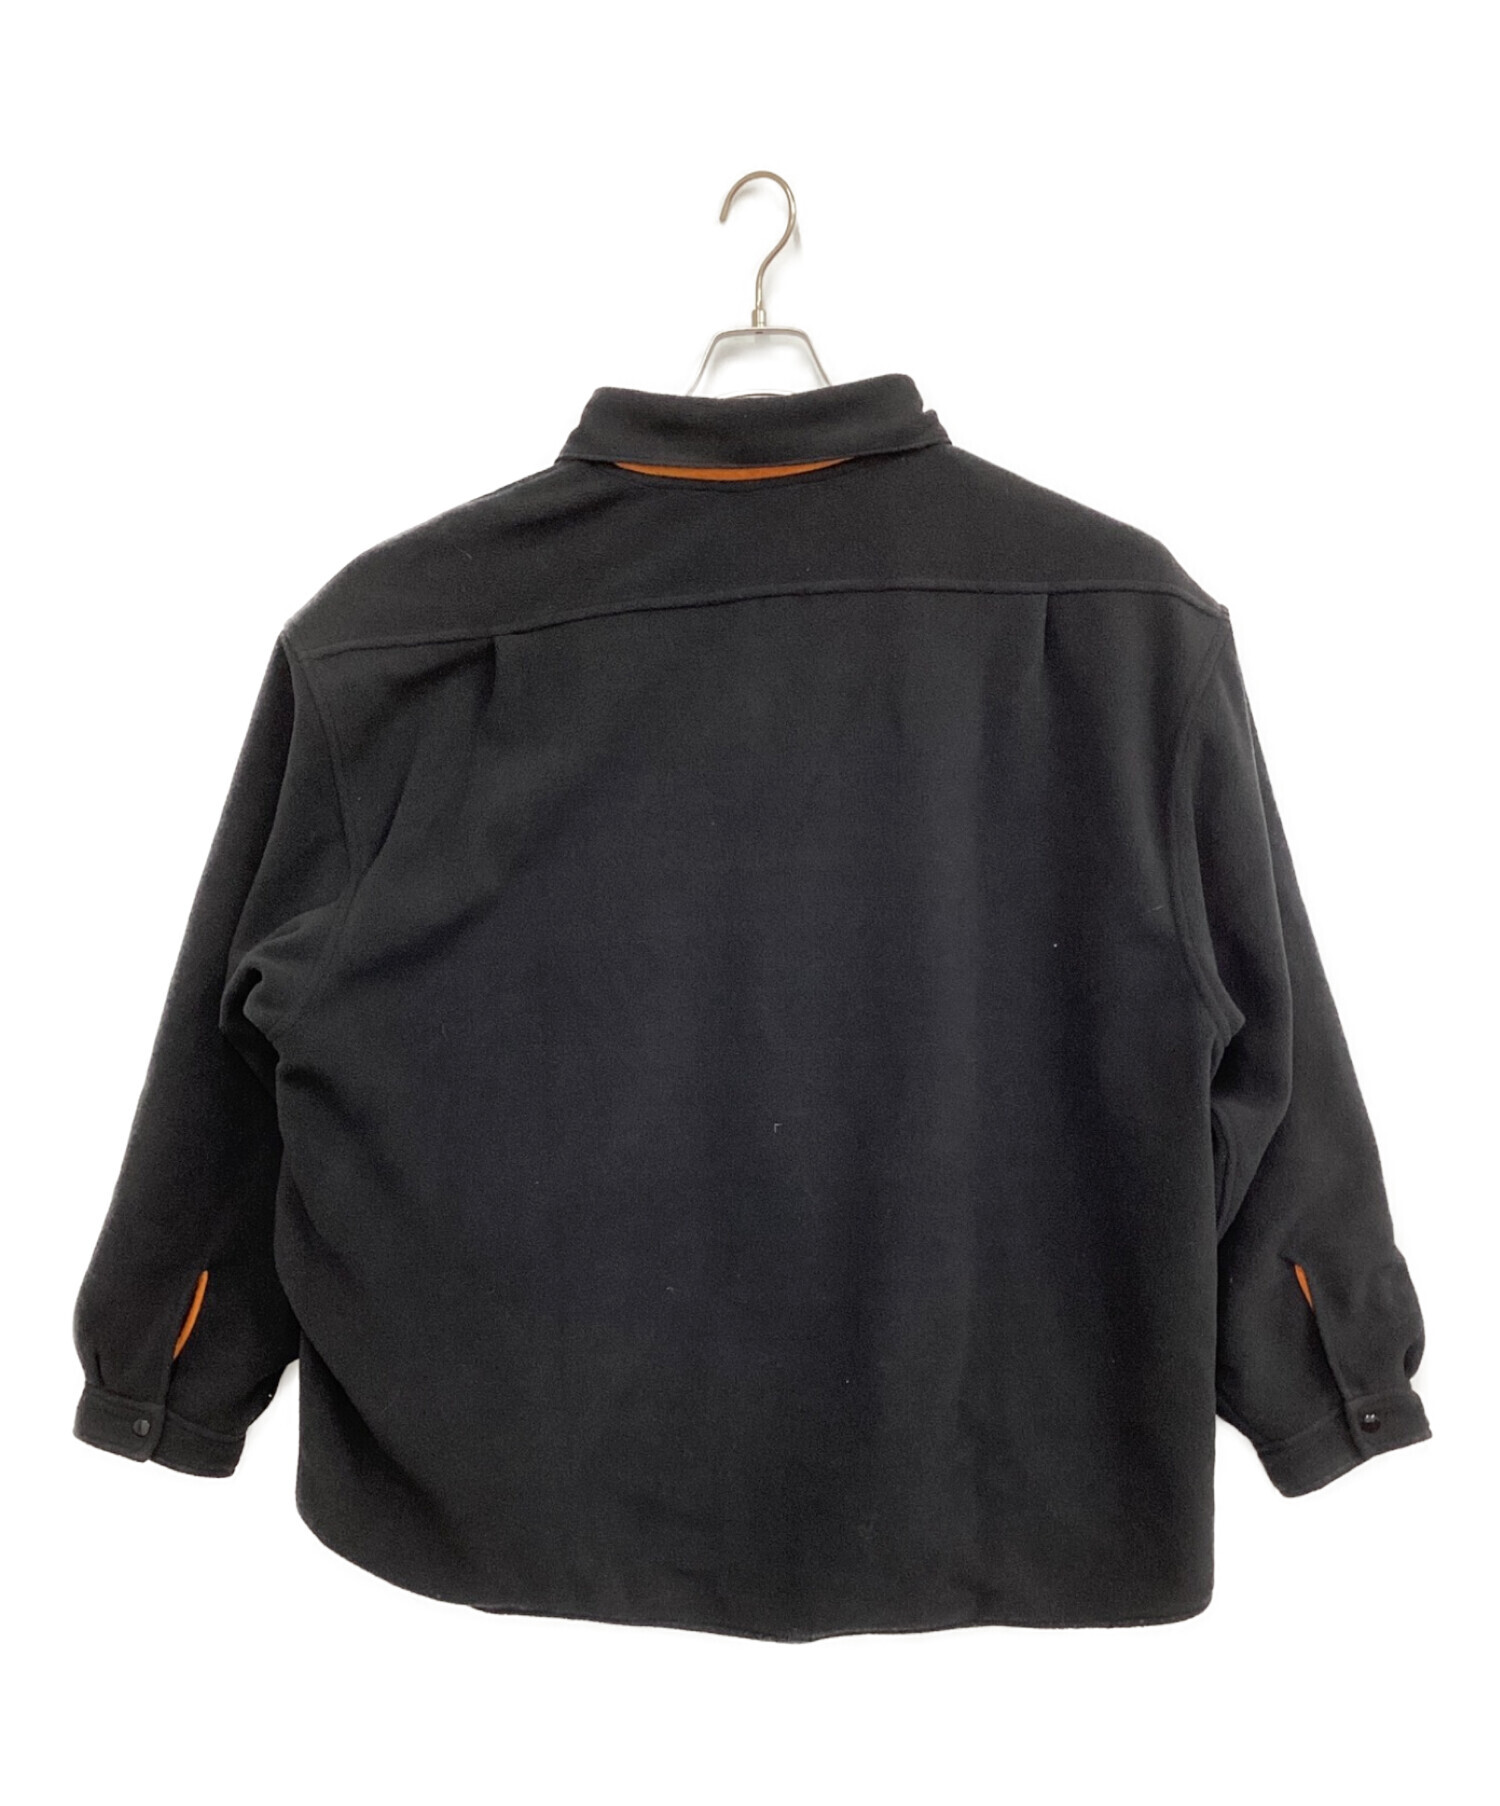 KEBOZ (ケボズ) フリースジップアップジャケット ブラック サイズ:L